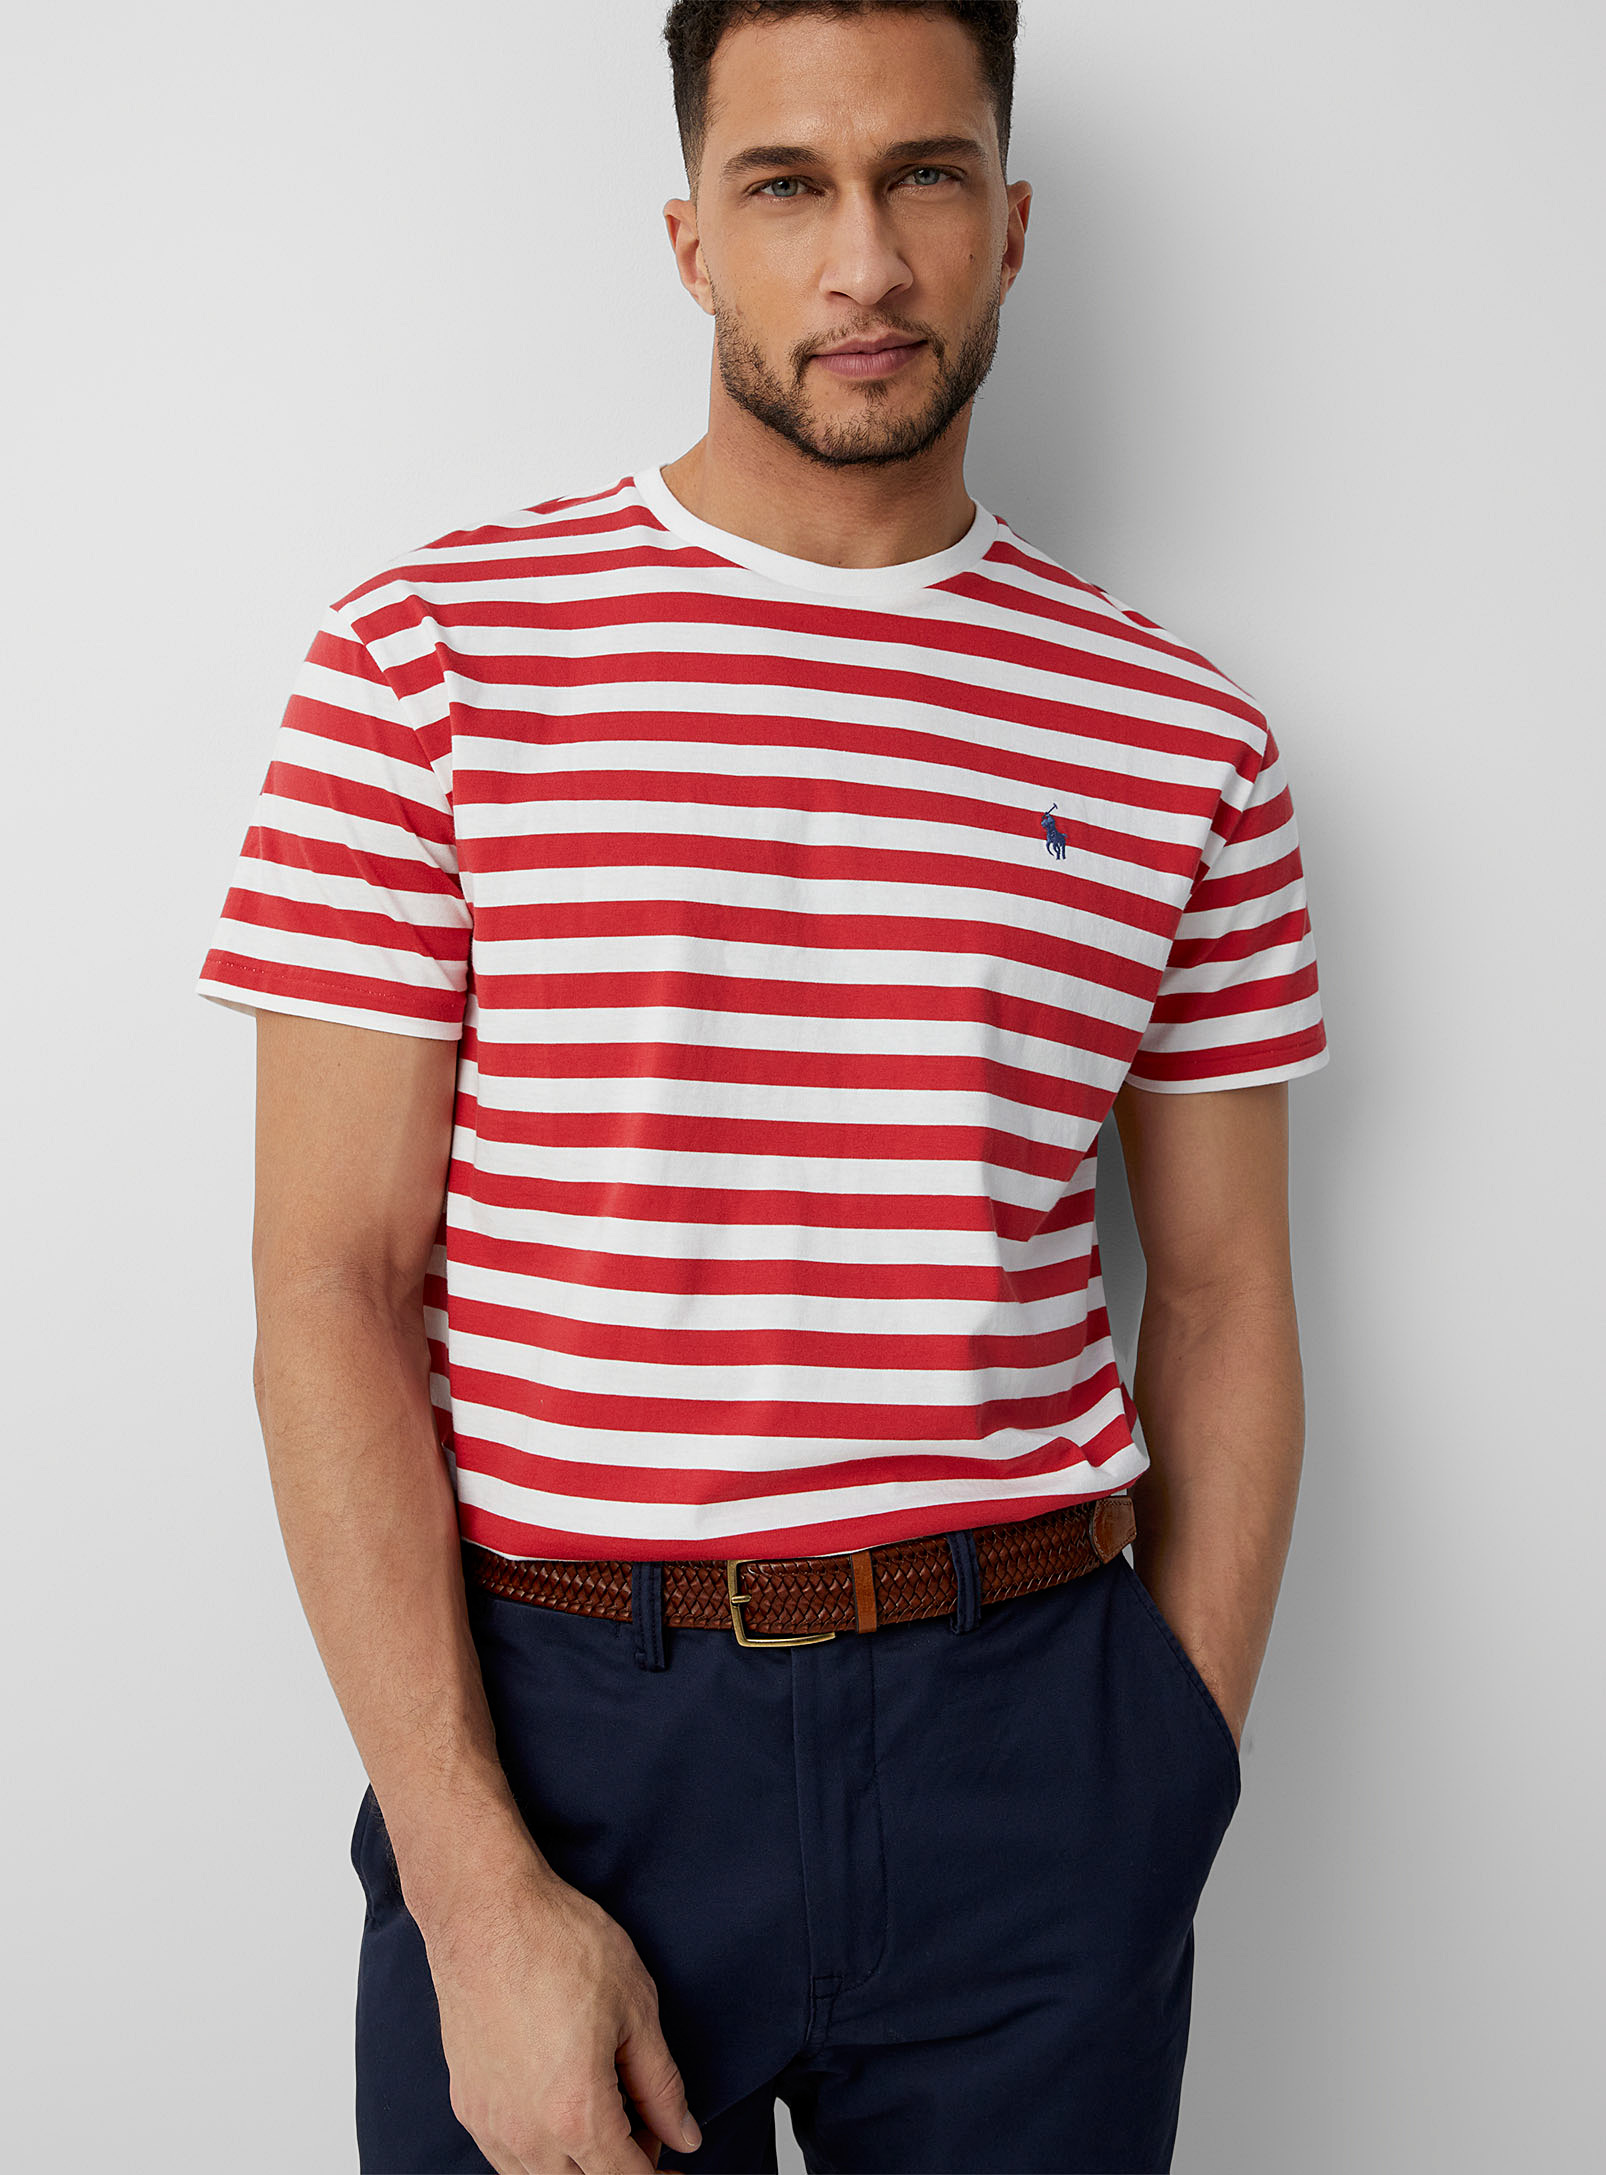 Polo Ralph Lauren - Le t-shirt rayures binaires